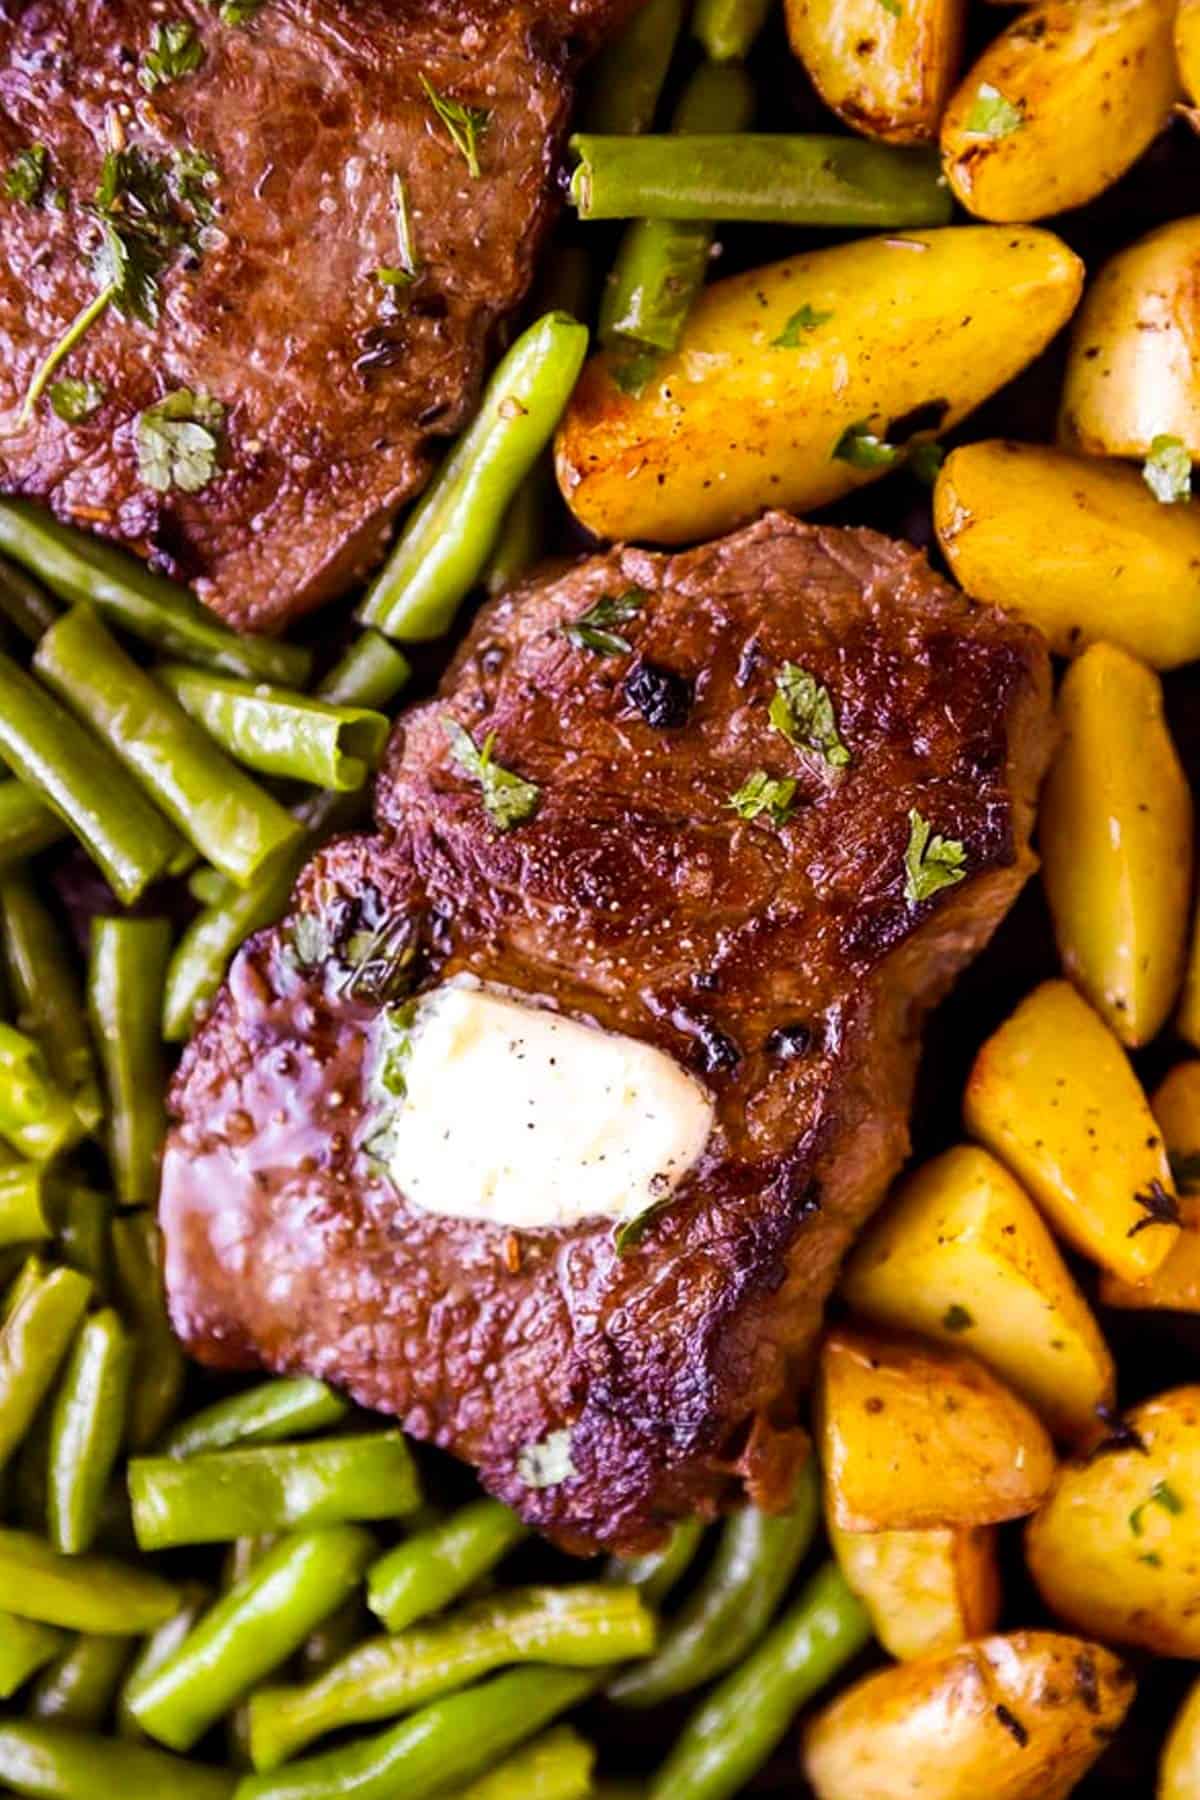 https://www.savorynothings.com/wp-content/uploads/2019/11/steak-and-potato-sheet-pan-dinner-image-2.jpg